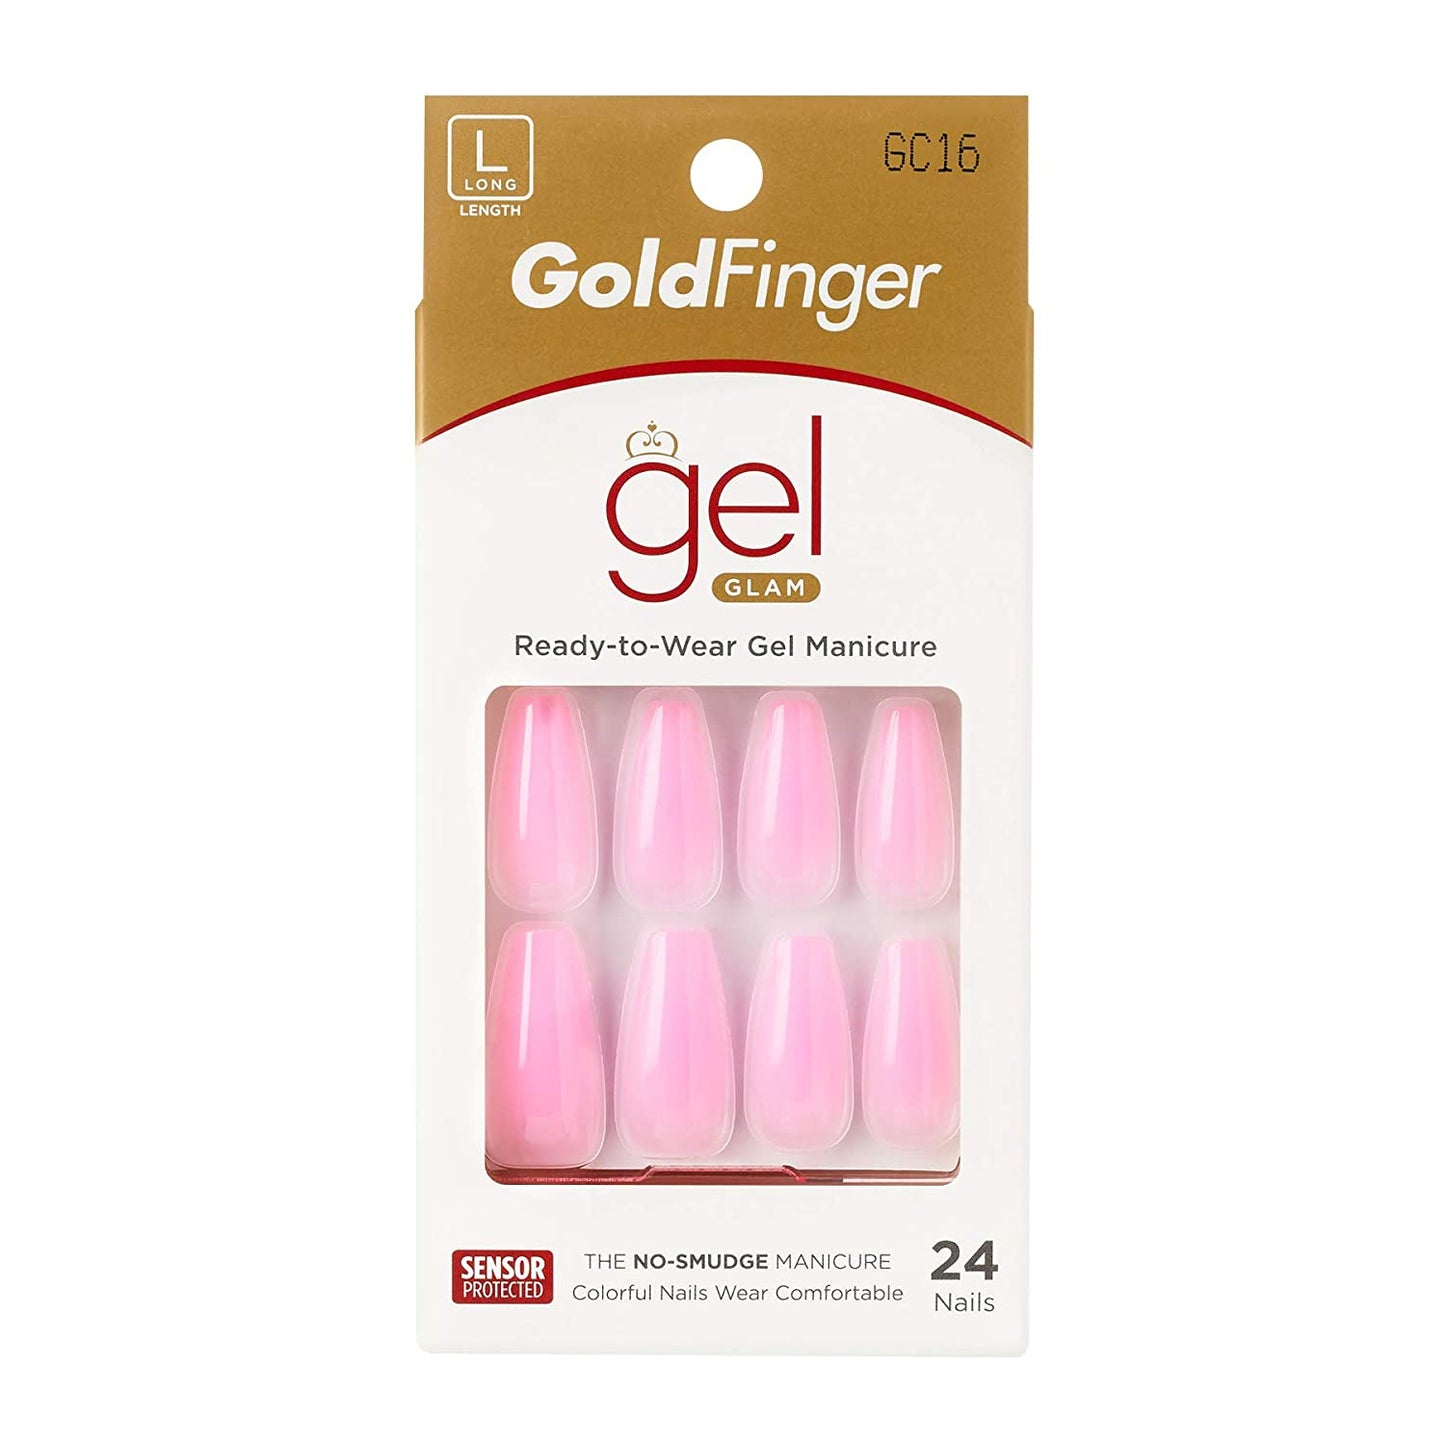 KISS GoldFinger Gel Glam Manicure Nails GC16